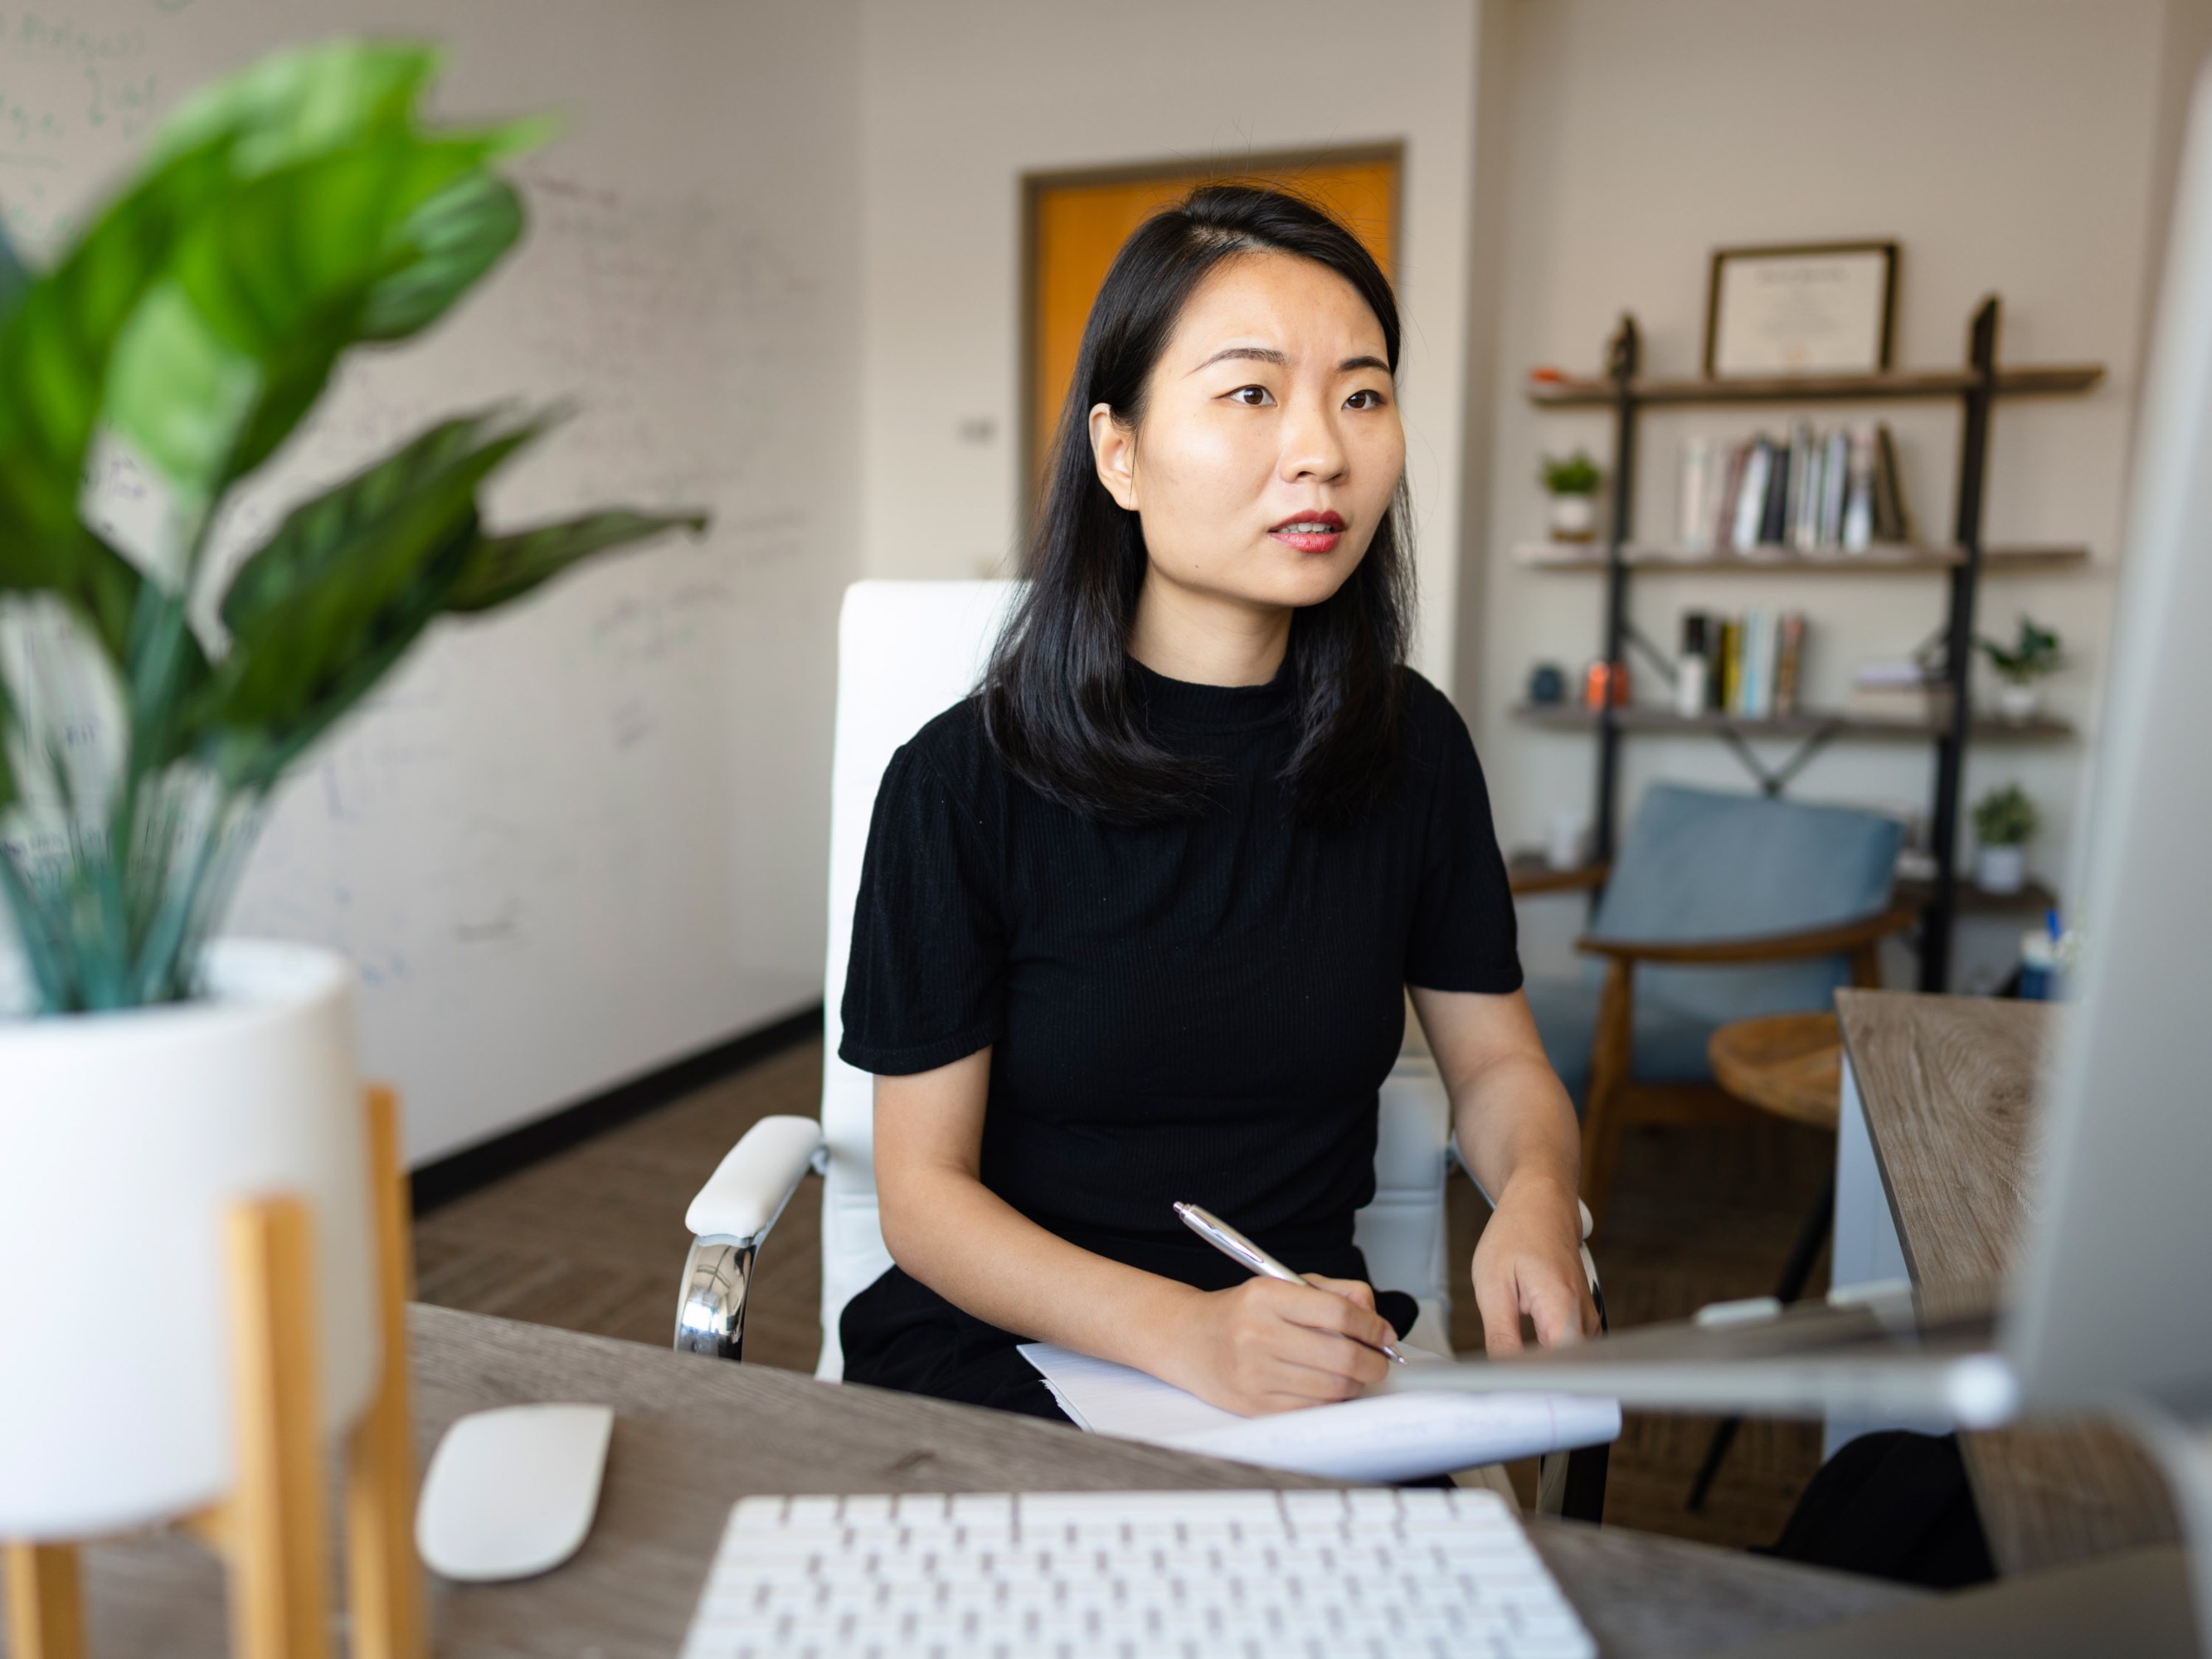 Sharon Yixuan Li working at her computer